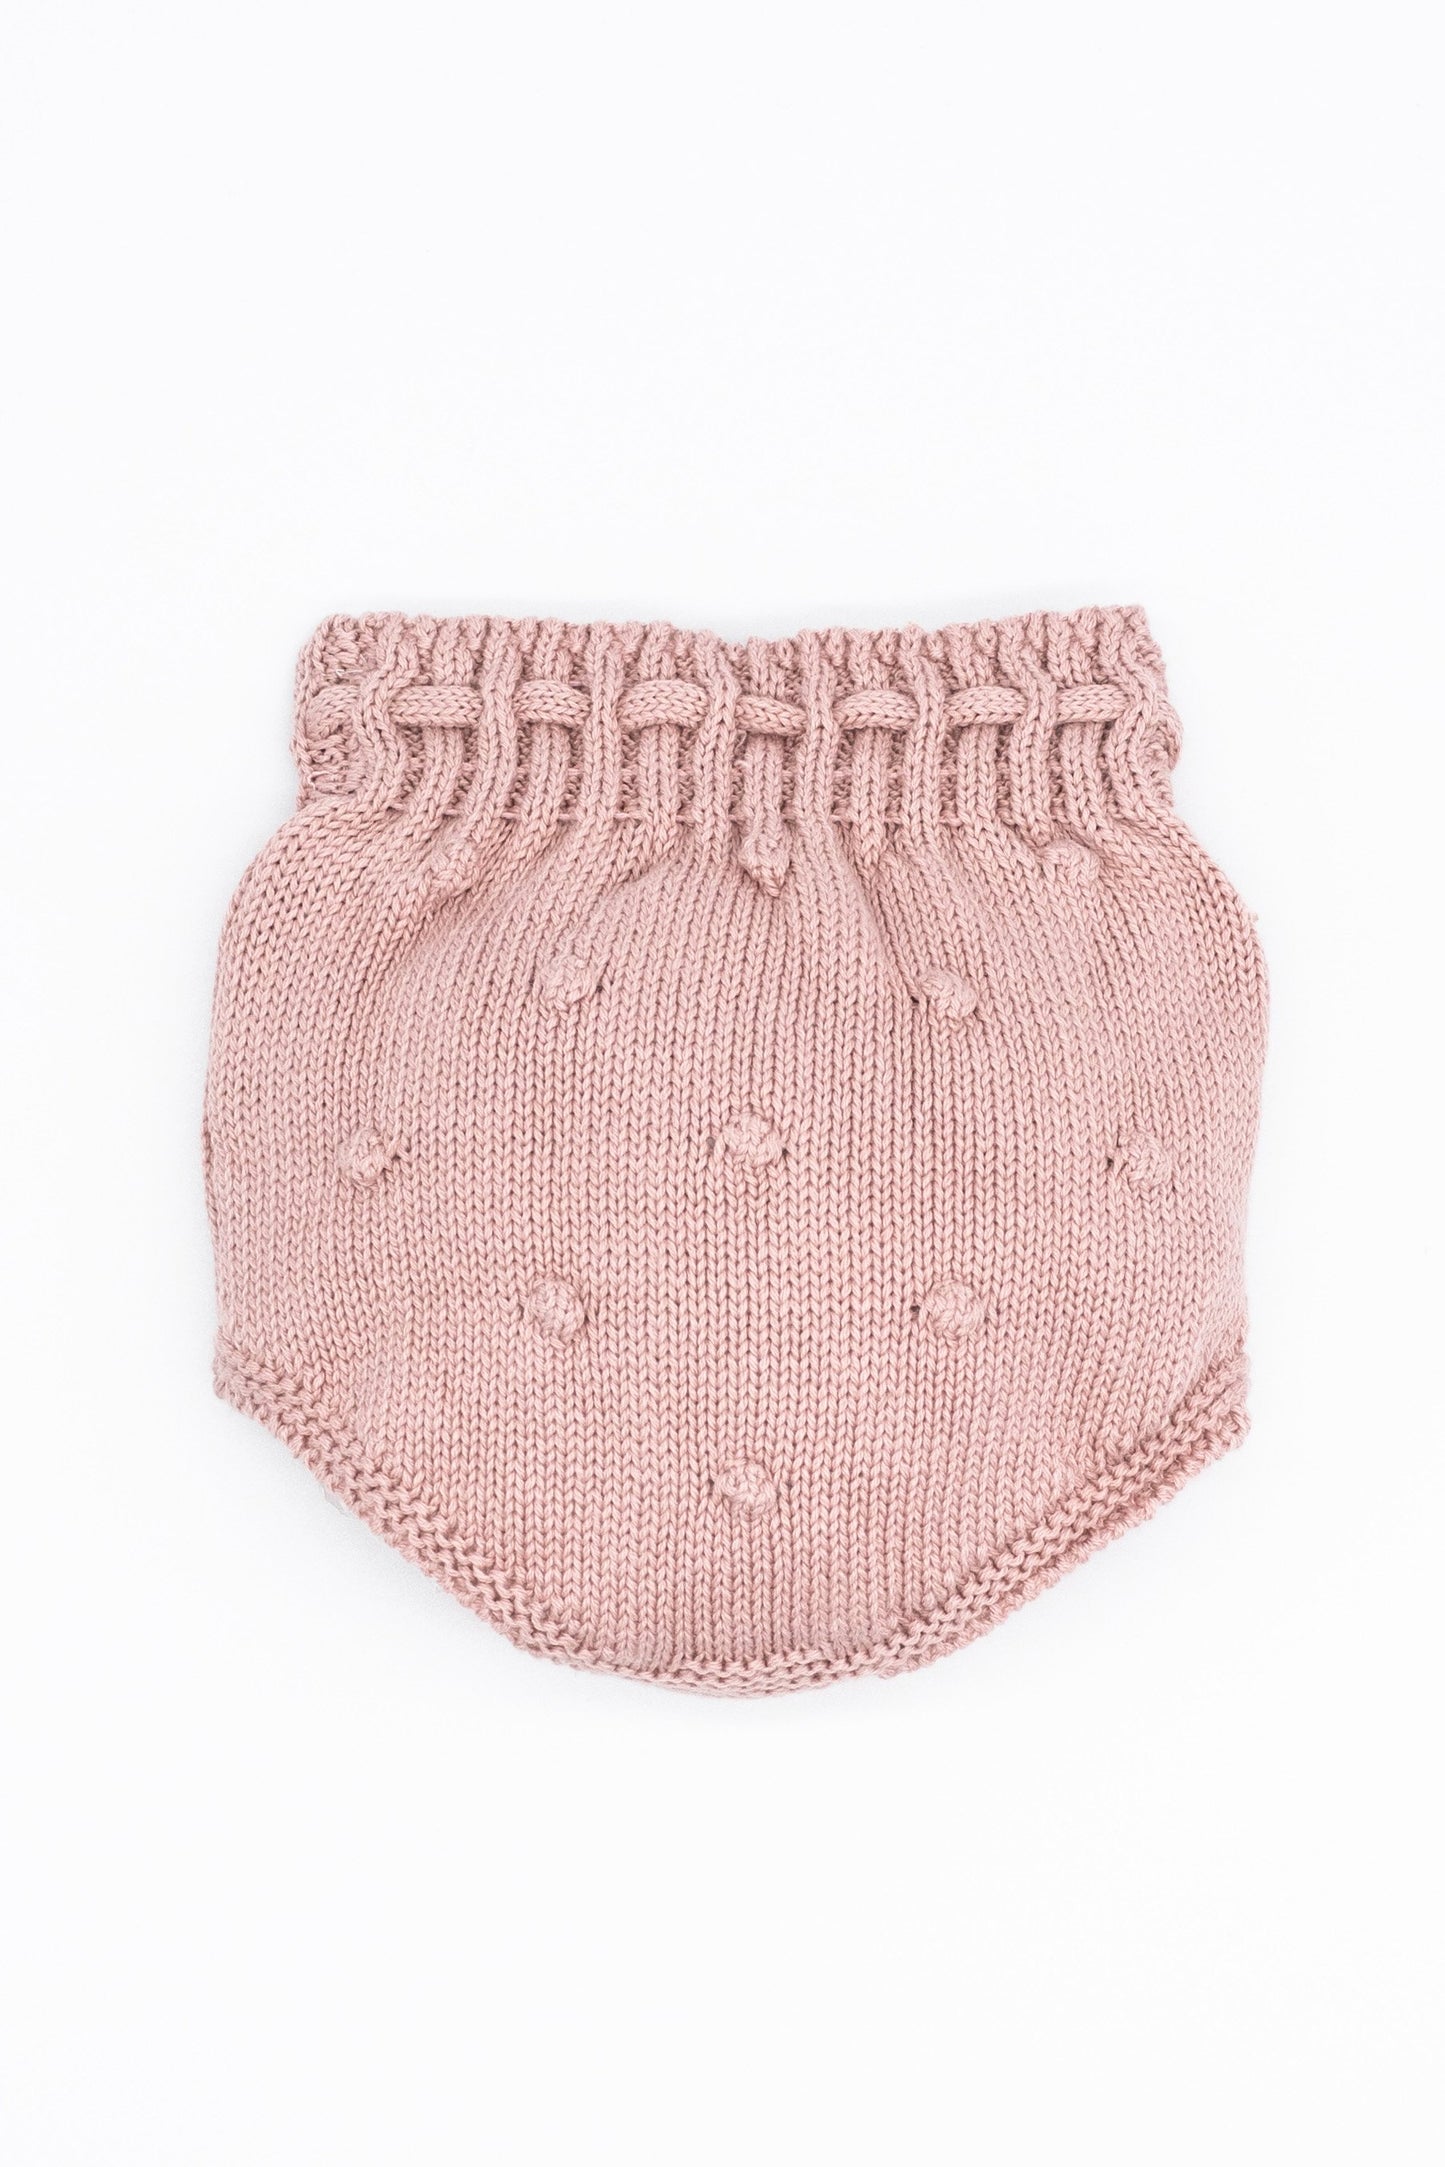 Knit pink merino wool shorts